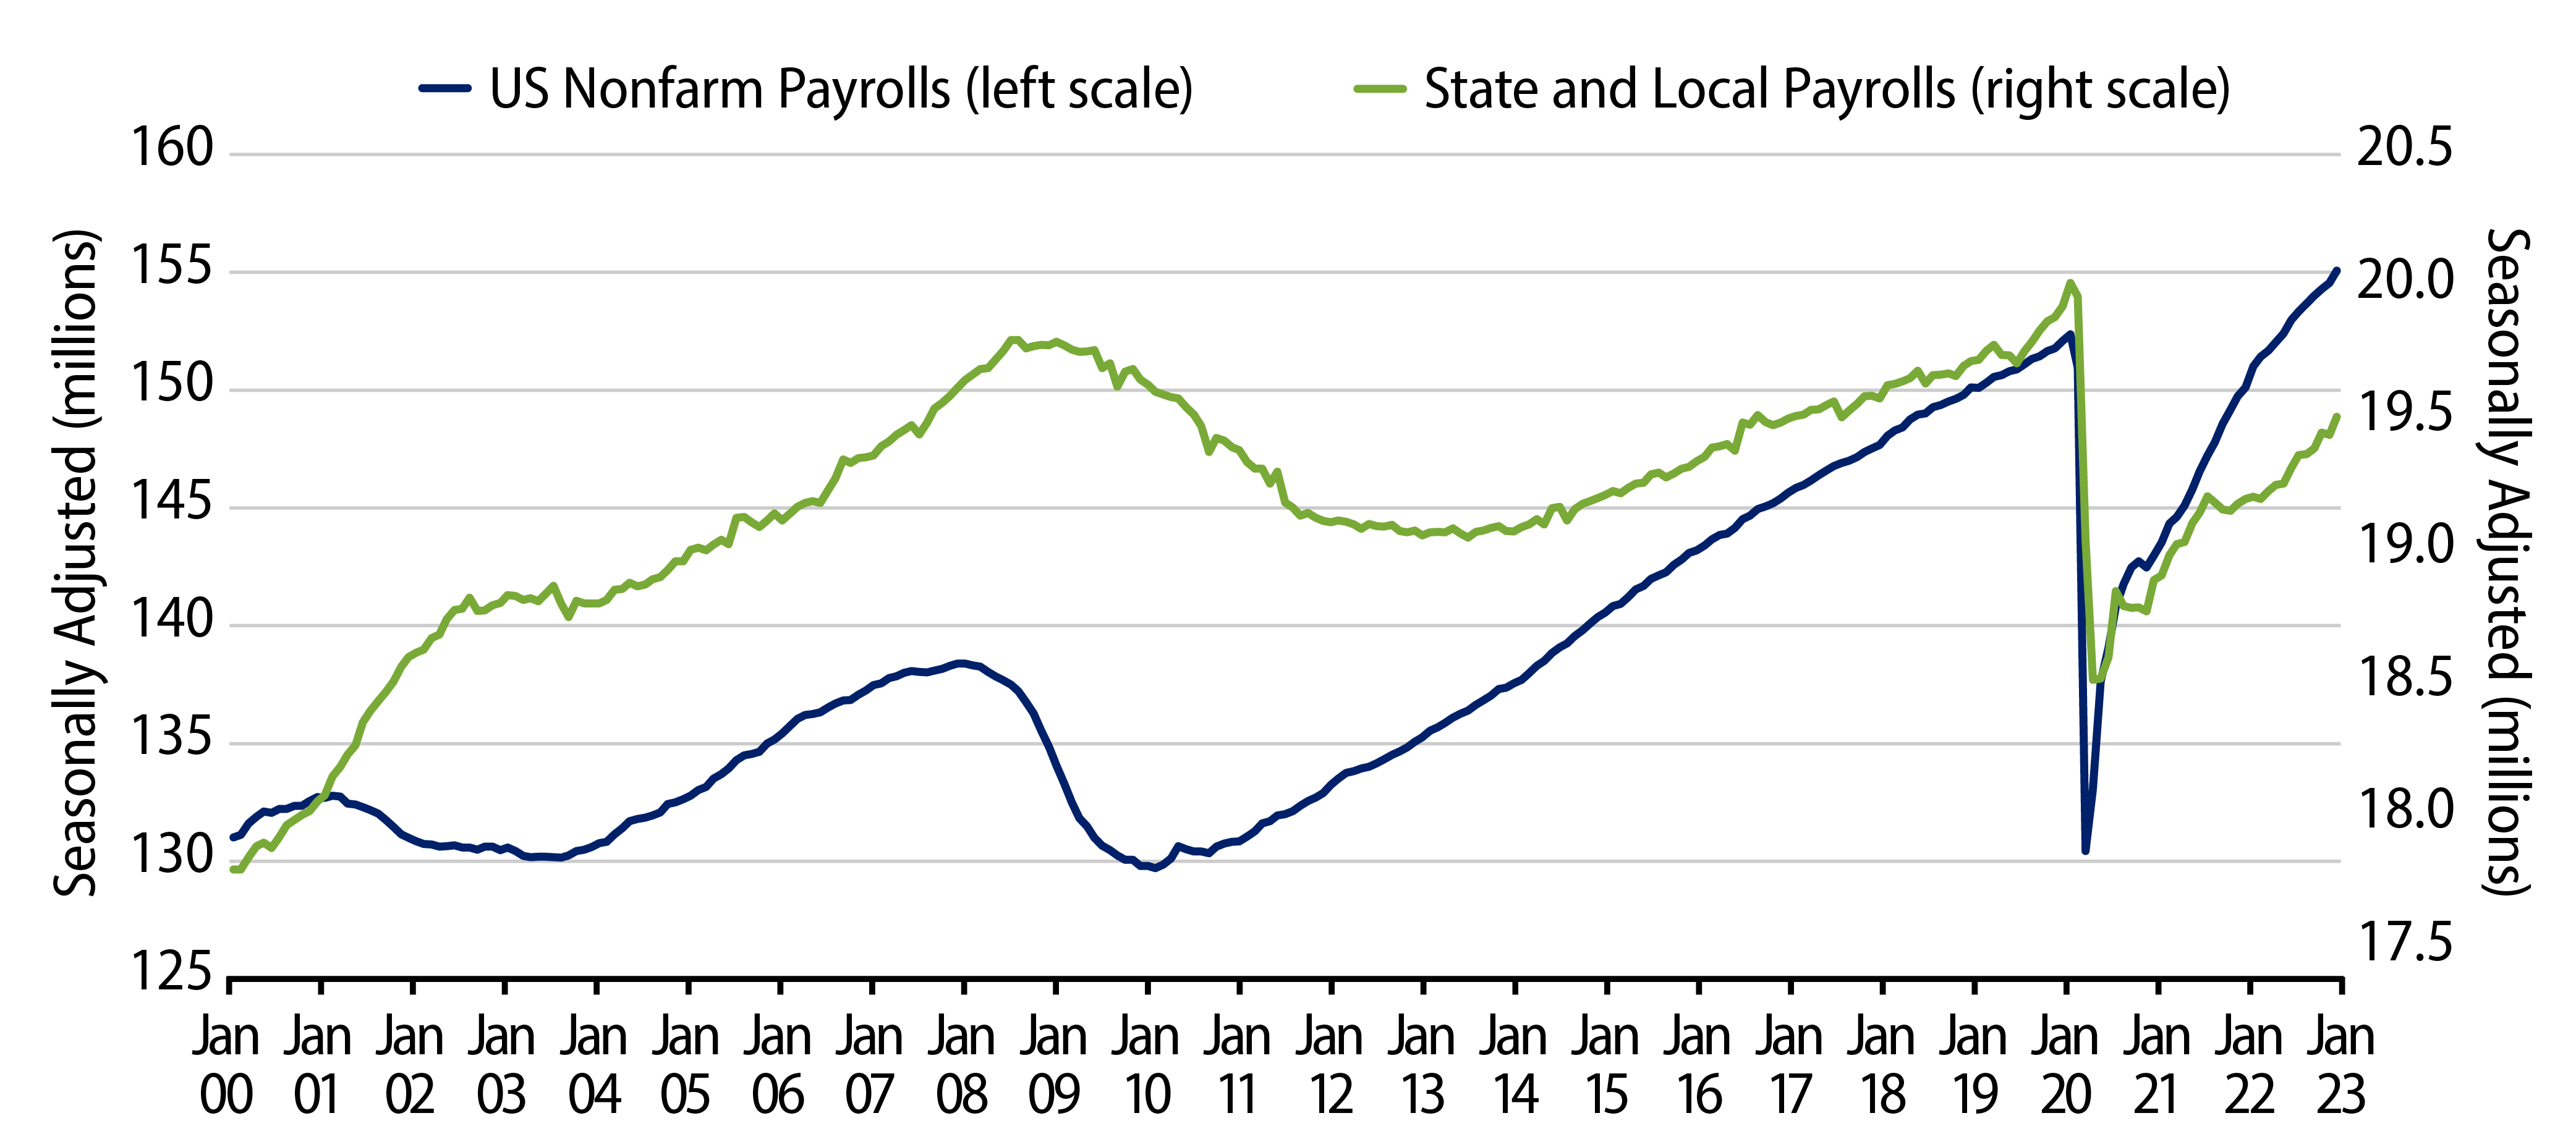 Explore US Nonfarm Payrolls vs. State and Local Payrolls